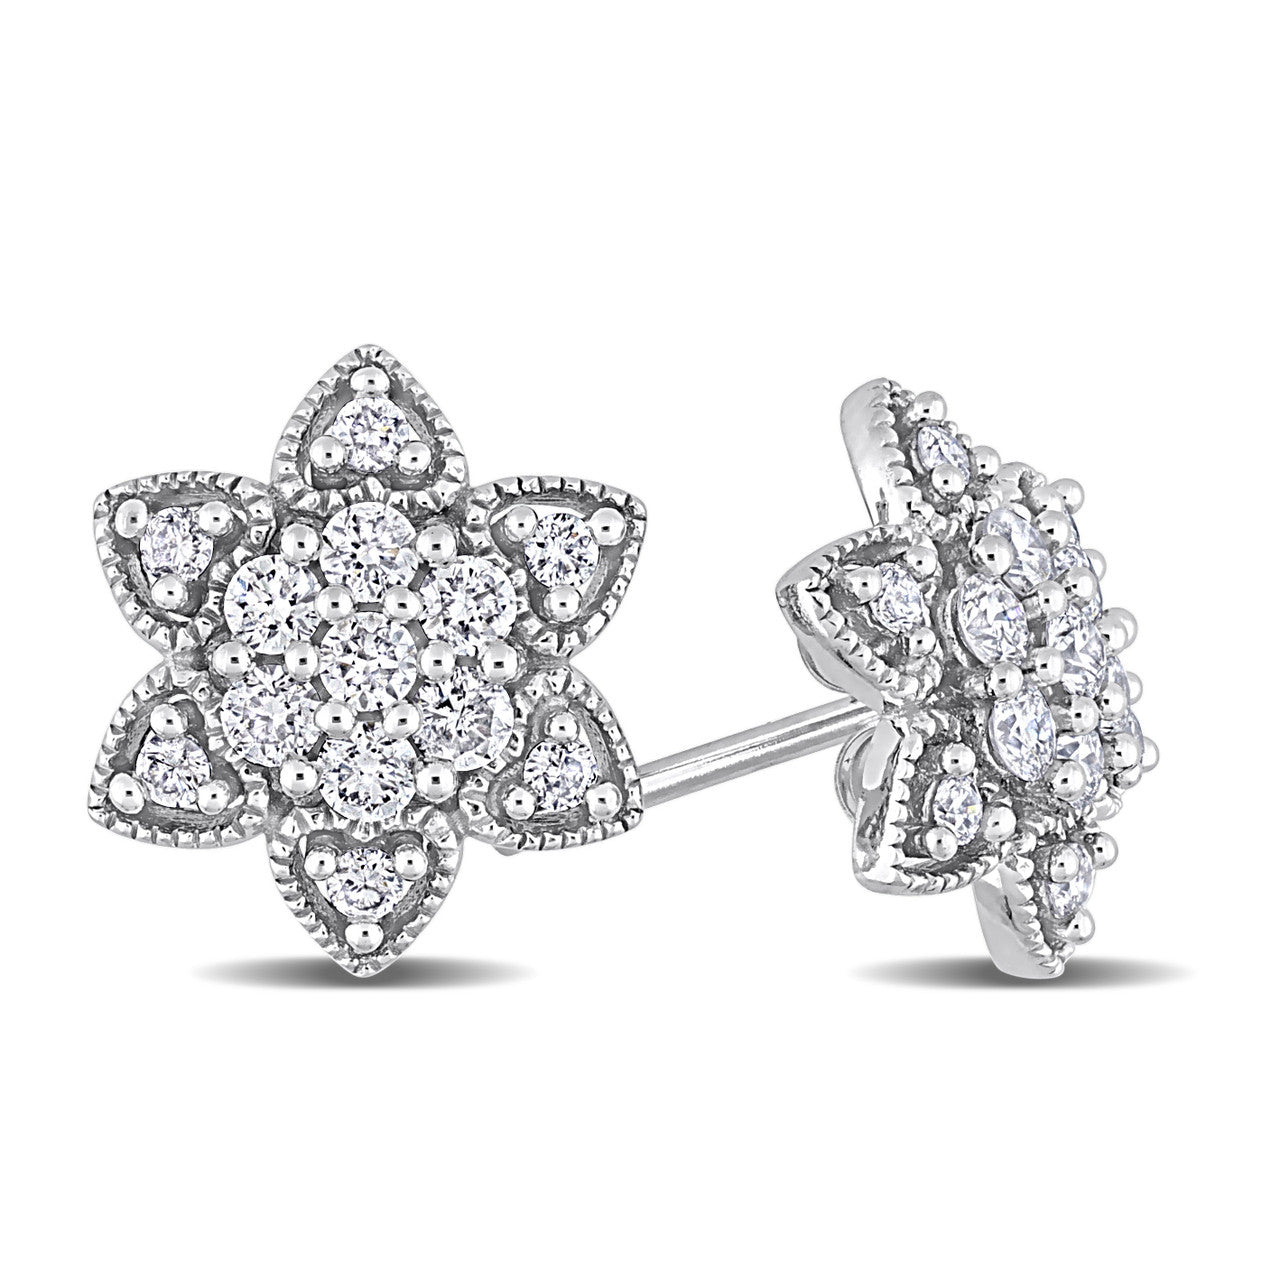 Ice Jewellery 1/2 CT Diamond Flower Star Stud Earrings in 14k White Gold - 75000005701 | Ice Jewellery Australia